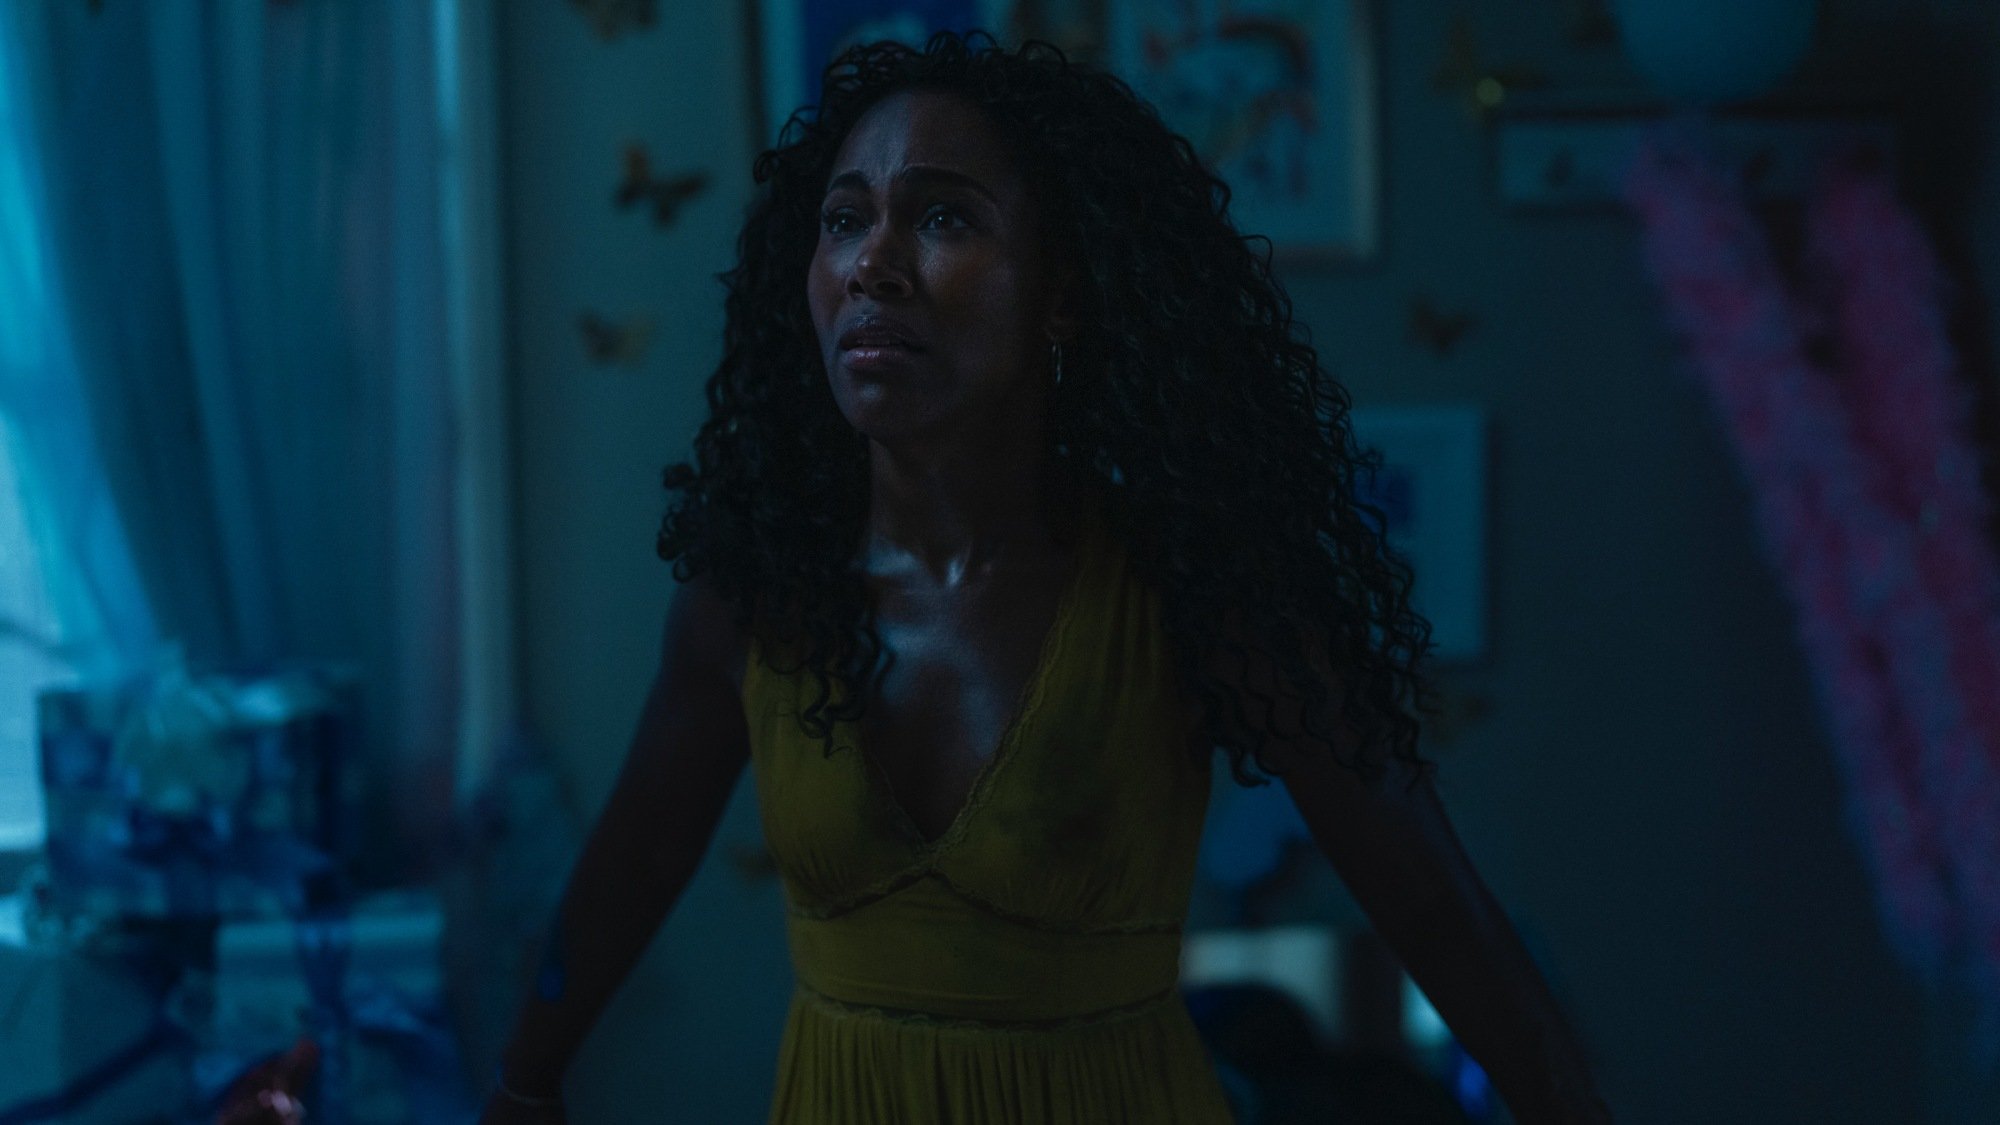 DeWanda Wise stars as a struggling stepmom in "Imaginary."